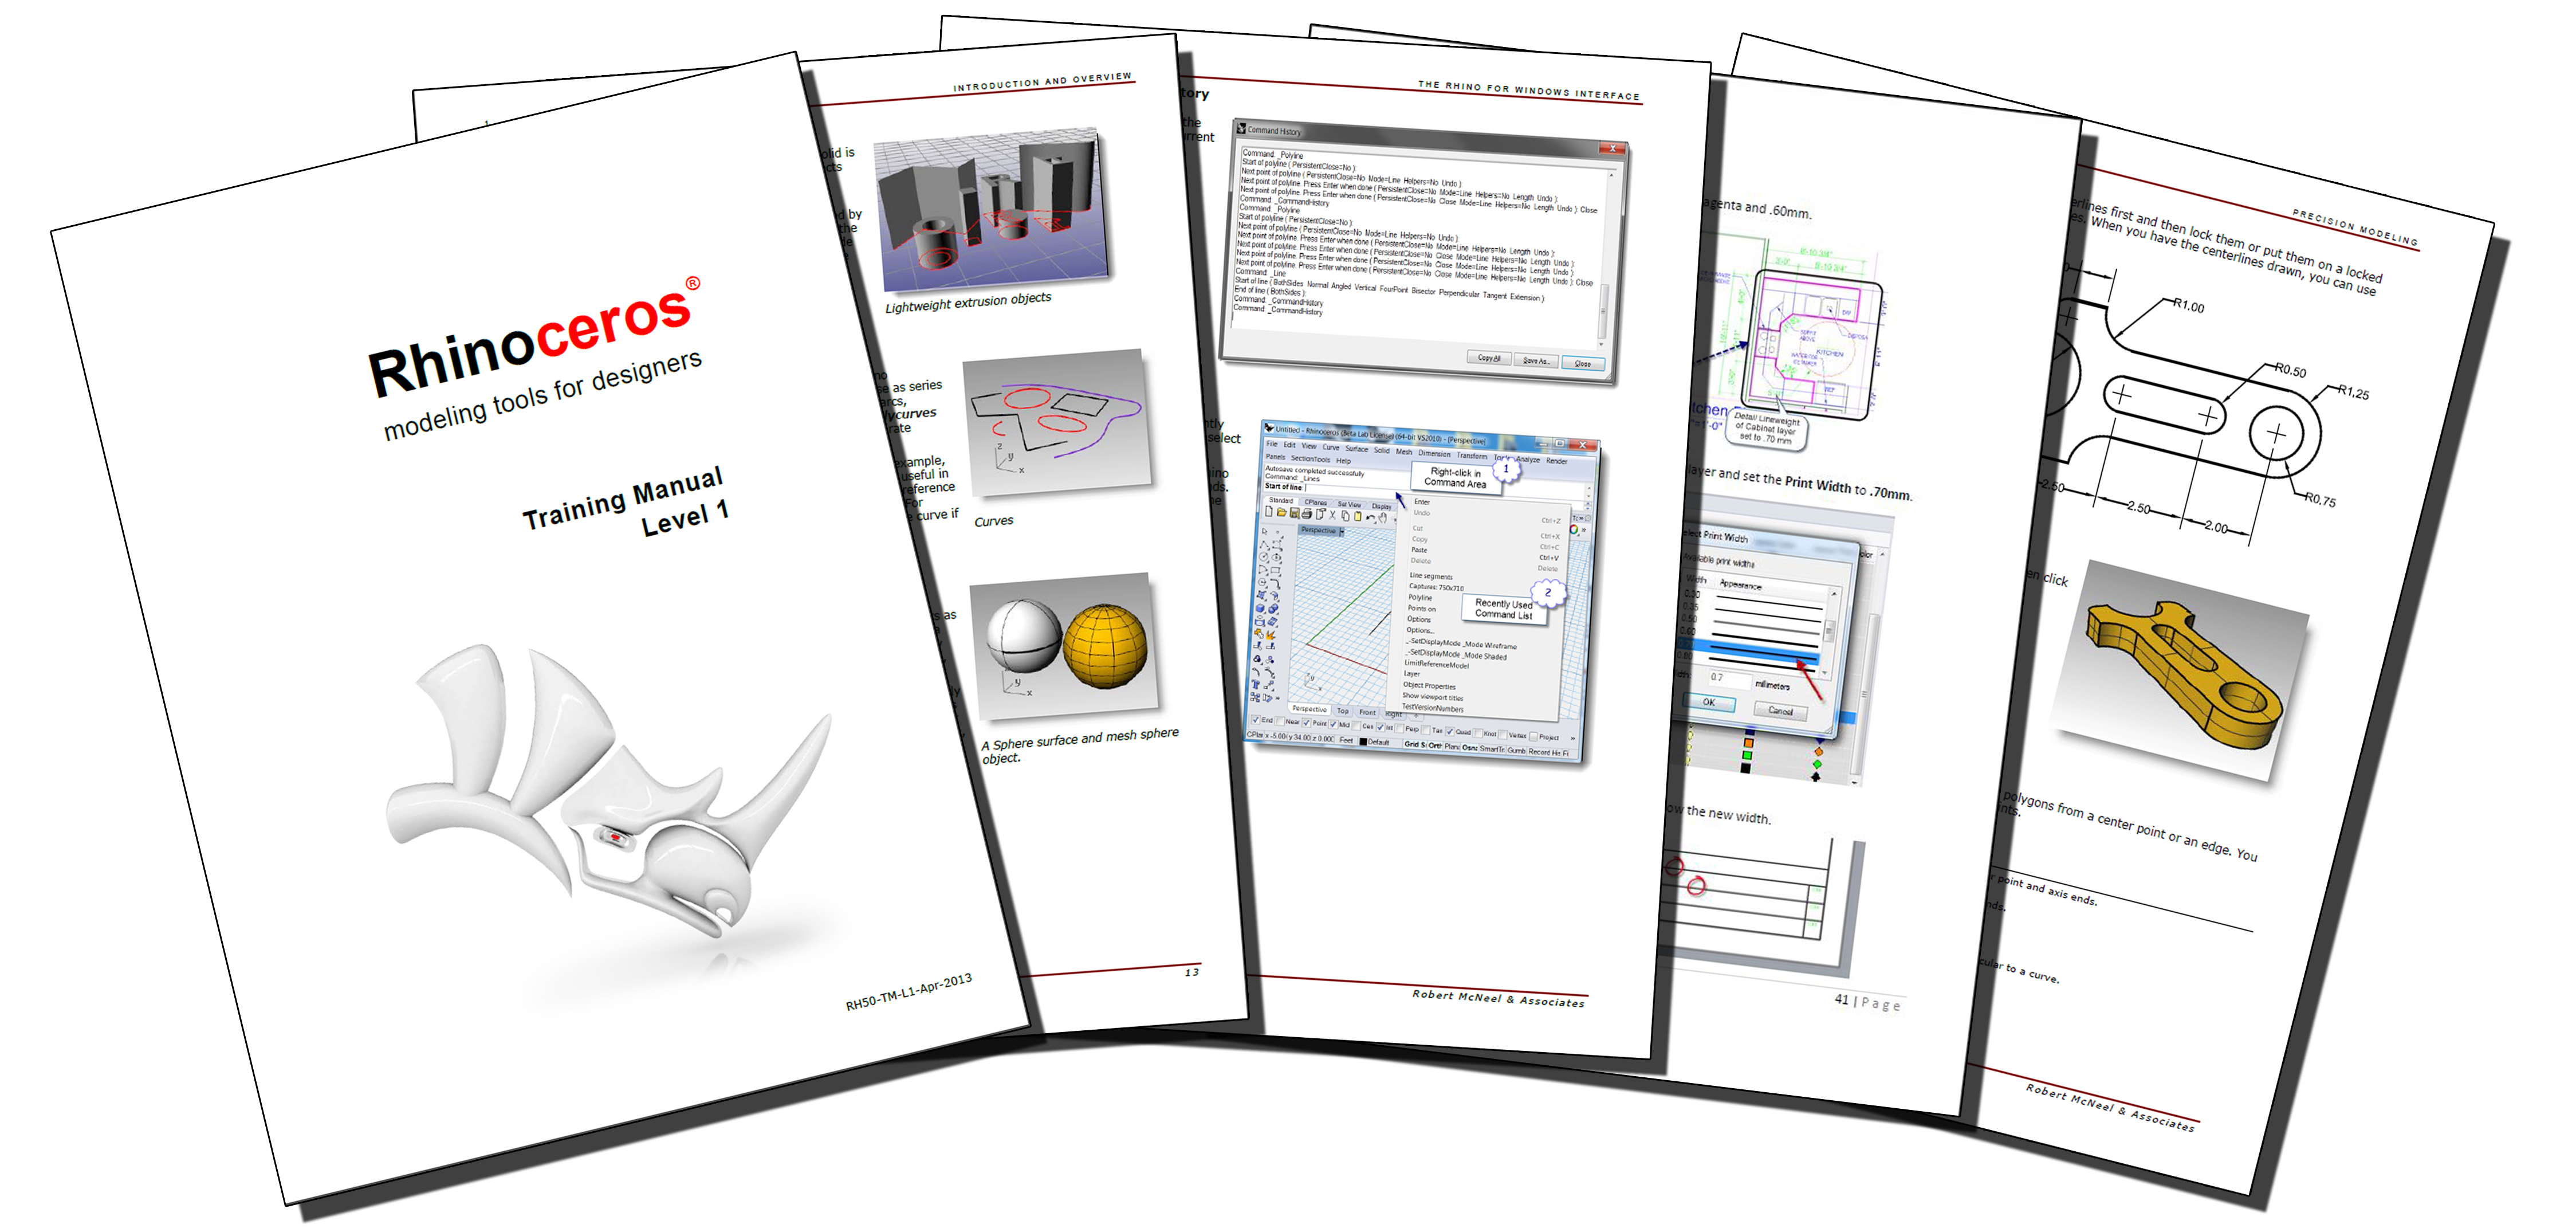 ecodial tutorial pdf